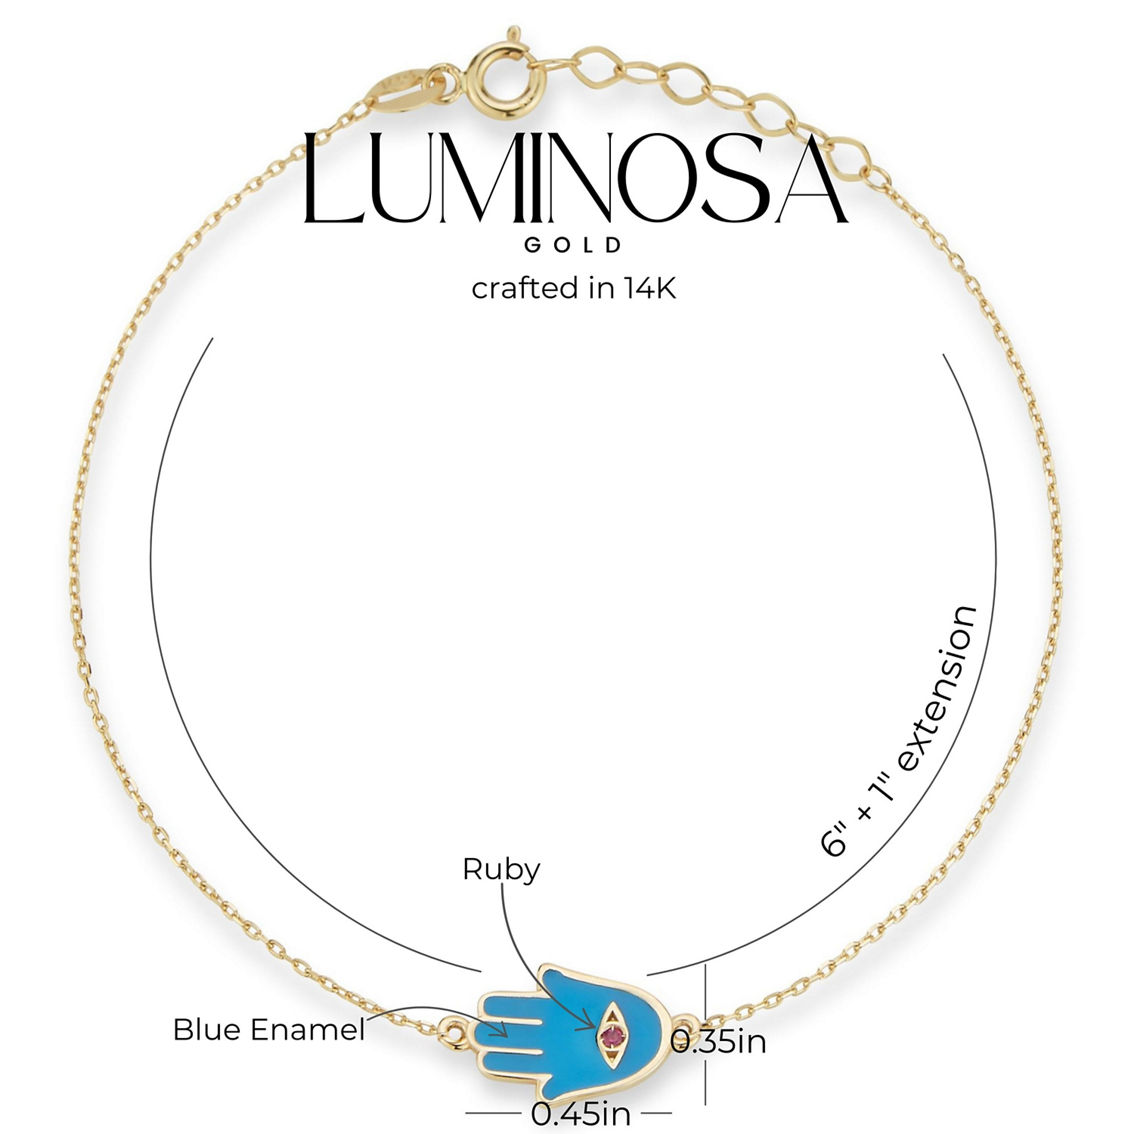 Luminosa Gold 14K Gold and Ruby Enamel Hamsa Bracelet - Image 3 of 5